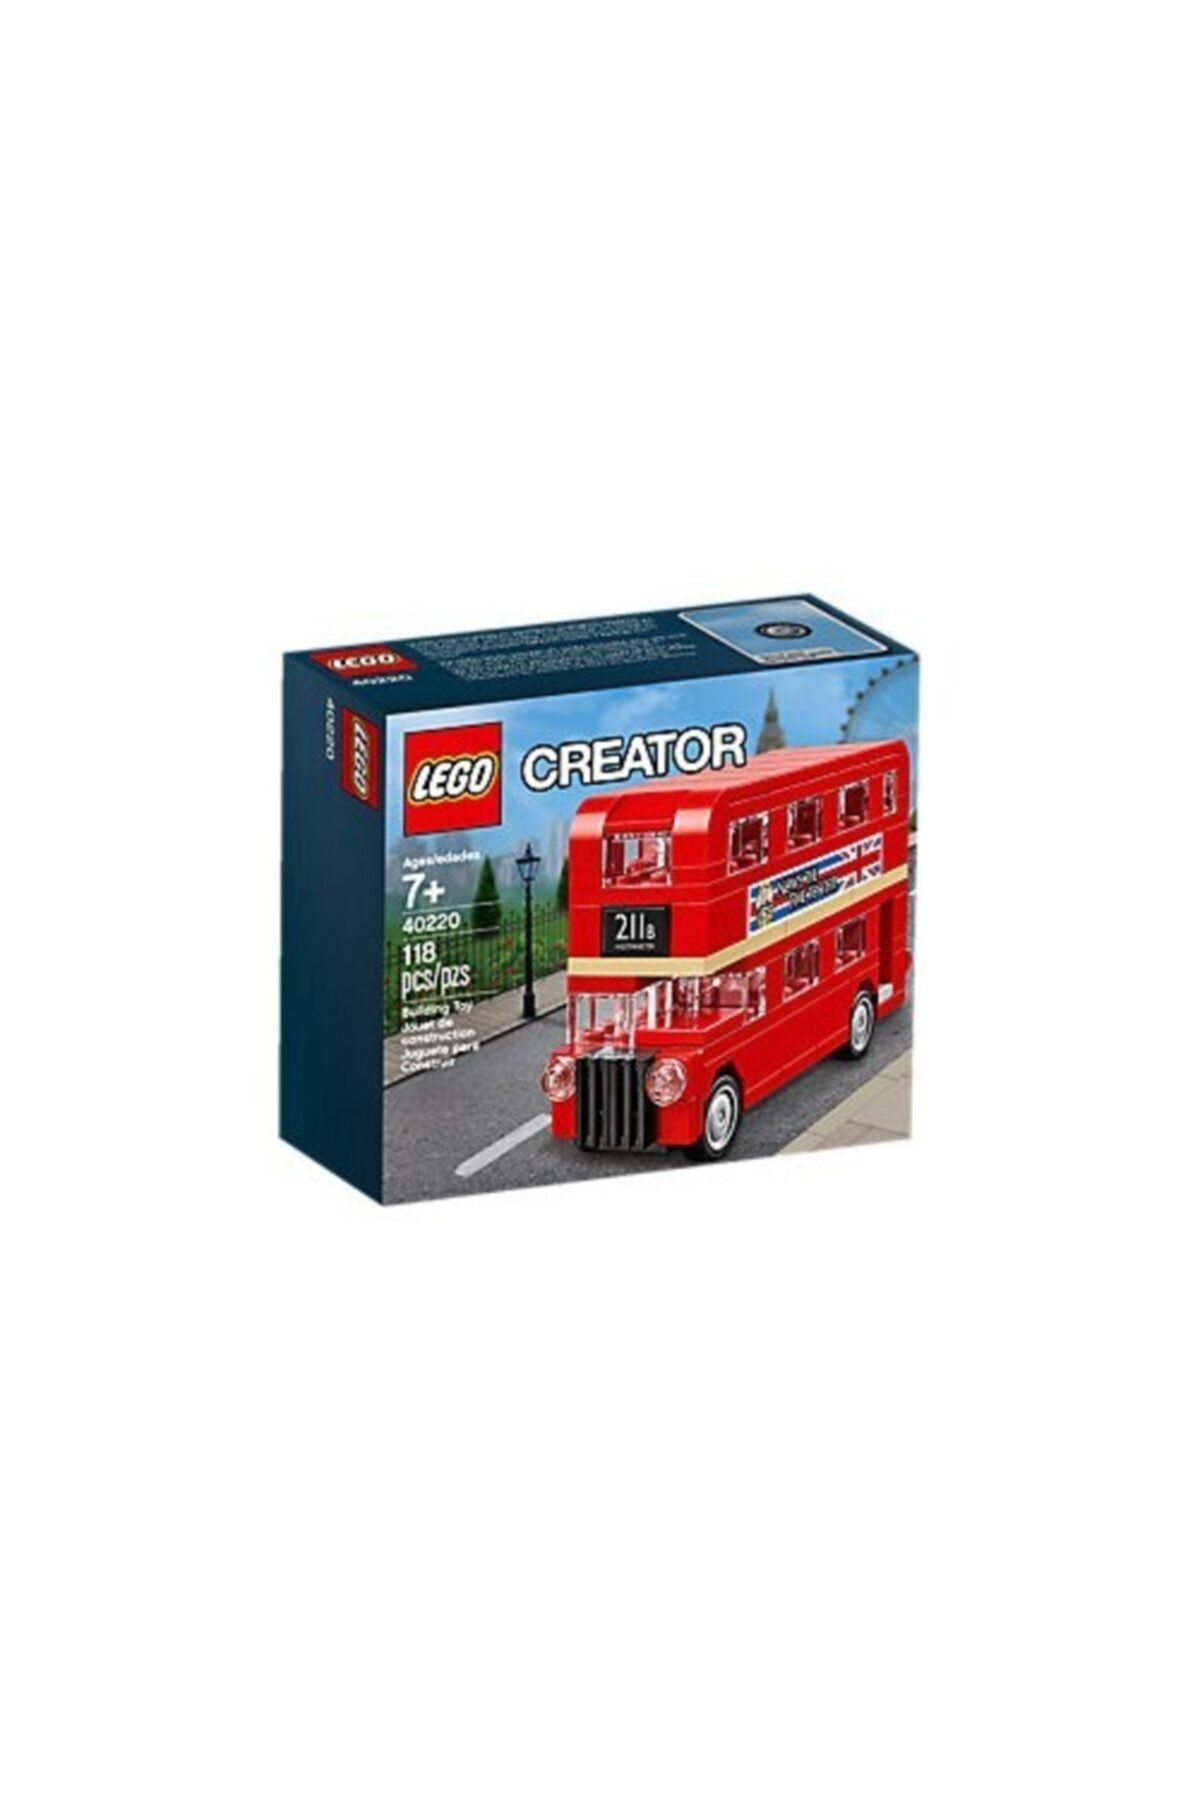 LEGO اتوبوس کرایتور 40220 لندن